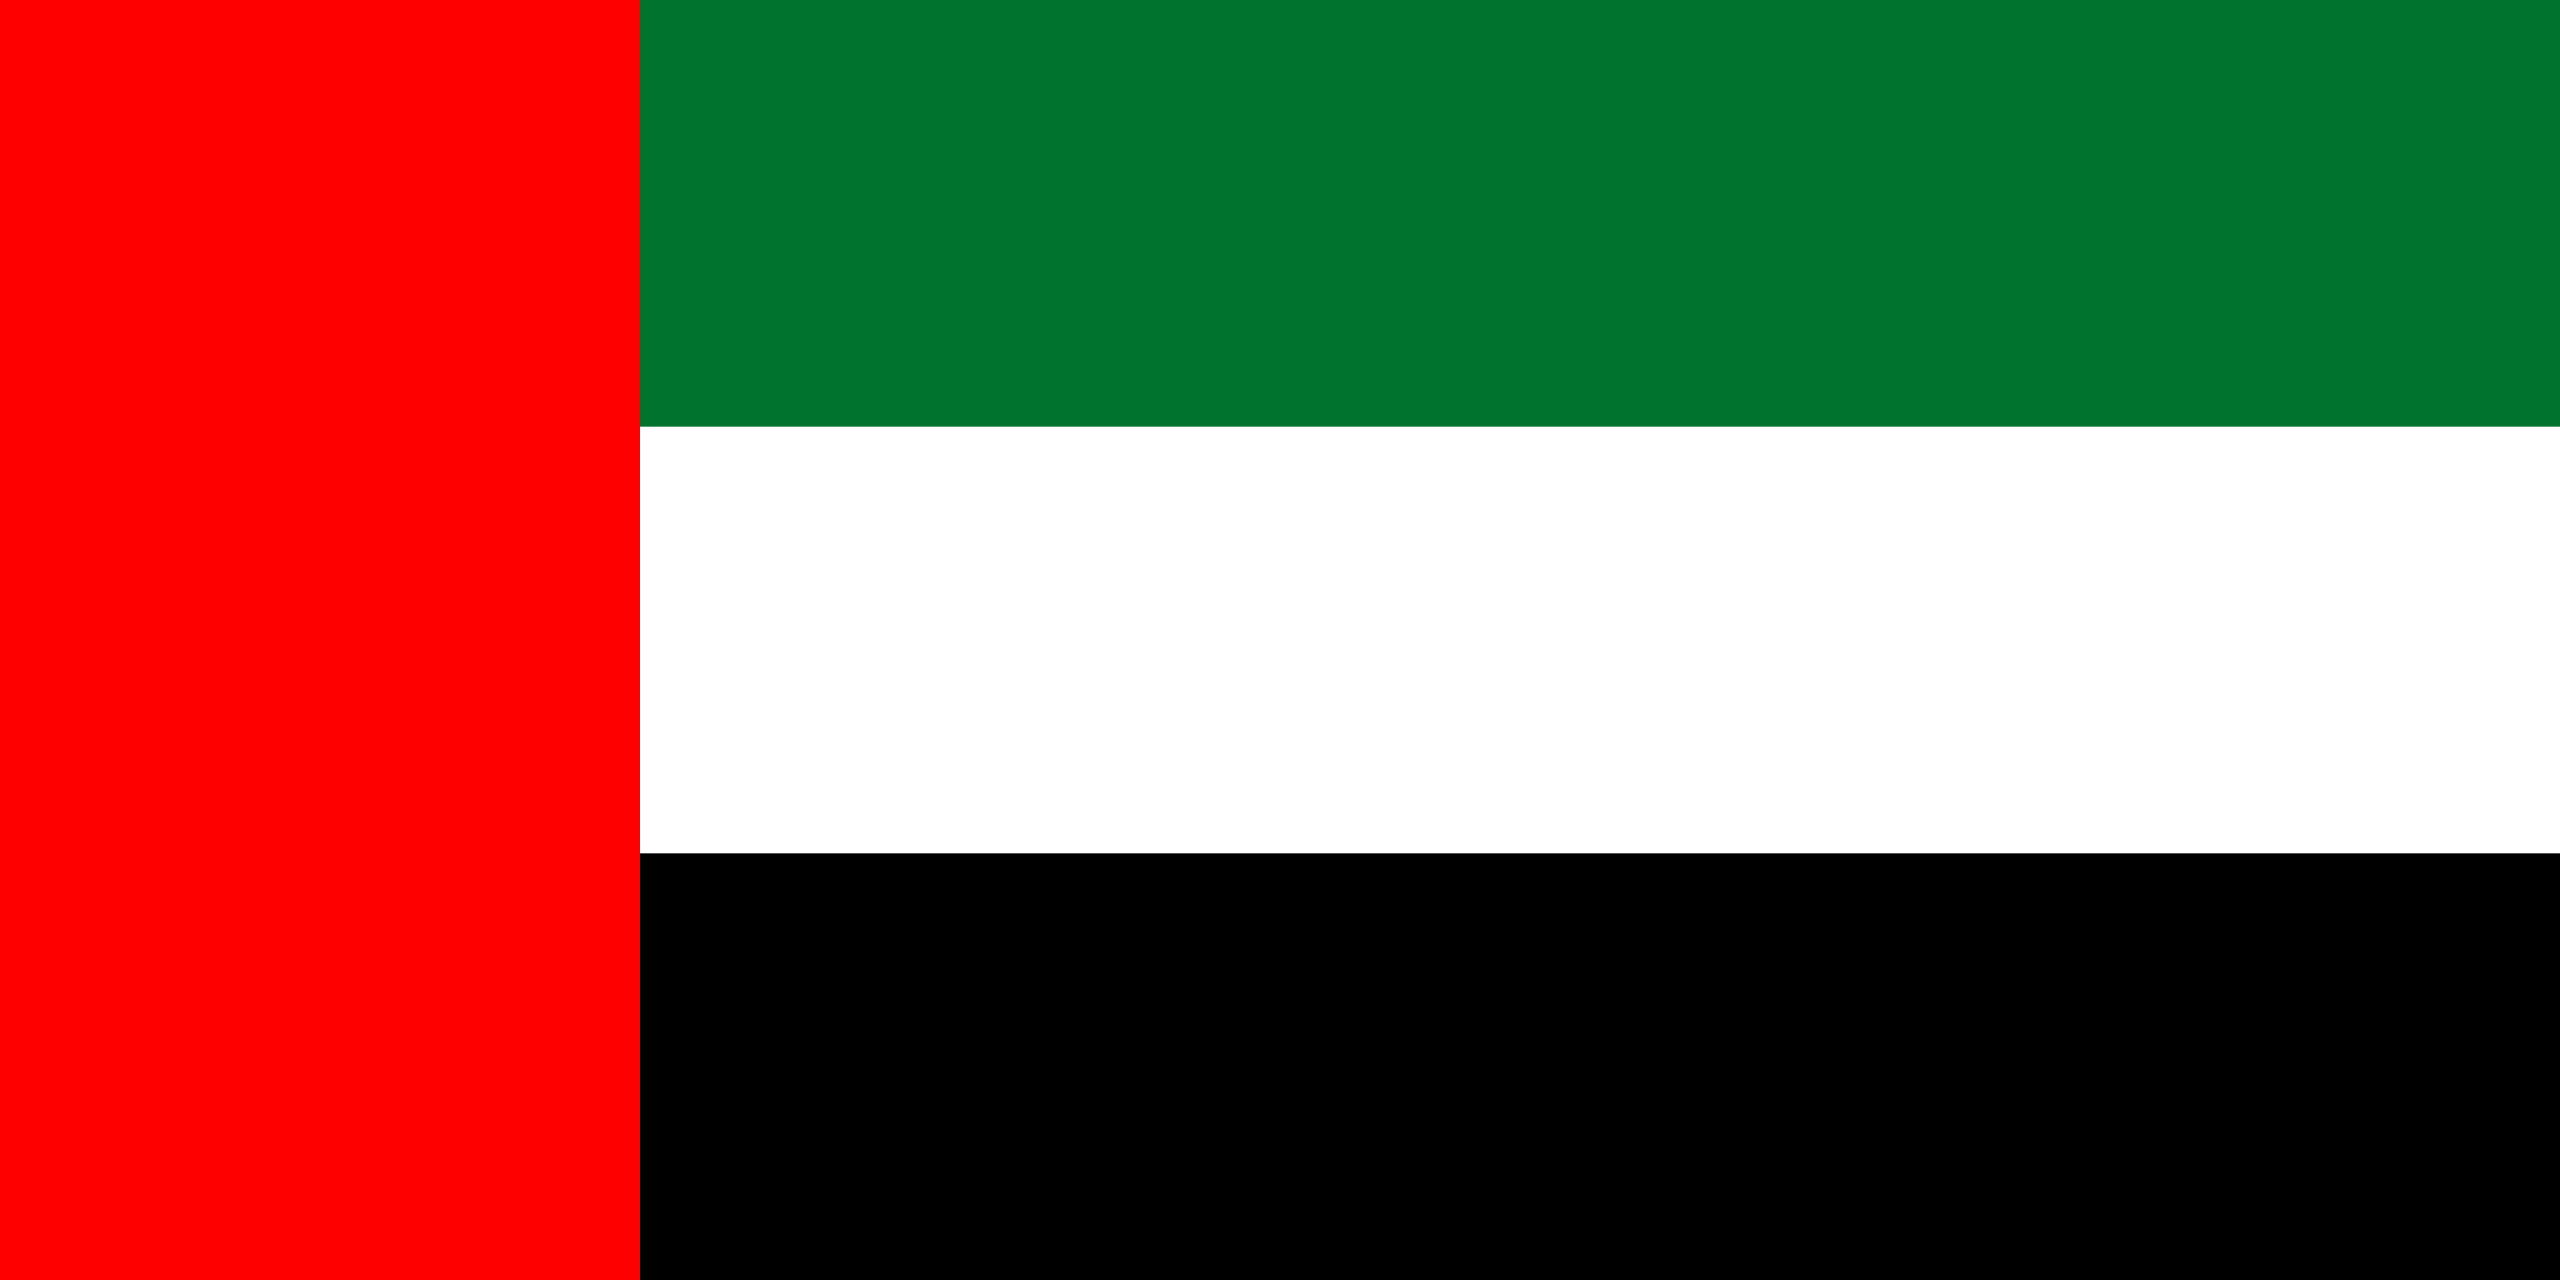 United Arab Emirates
